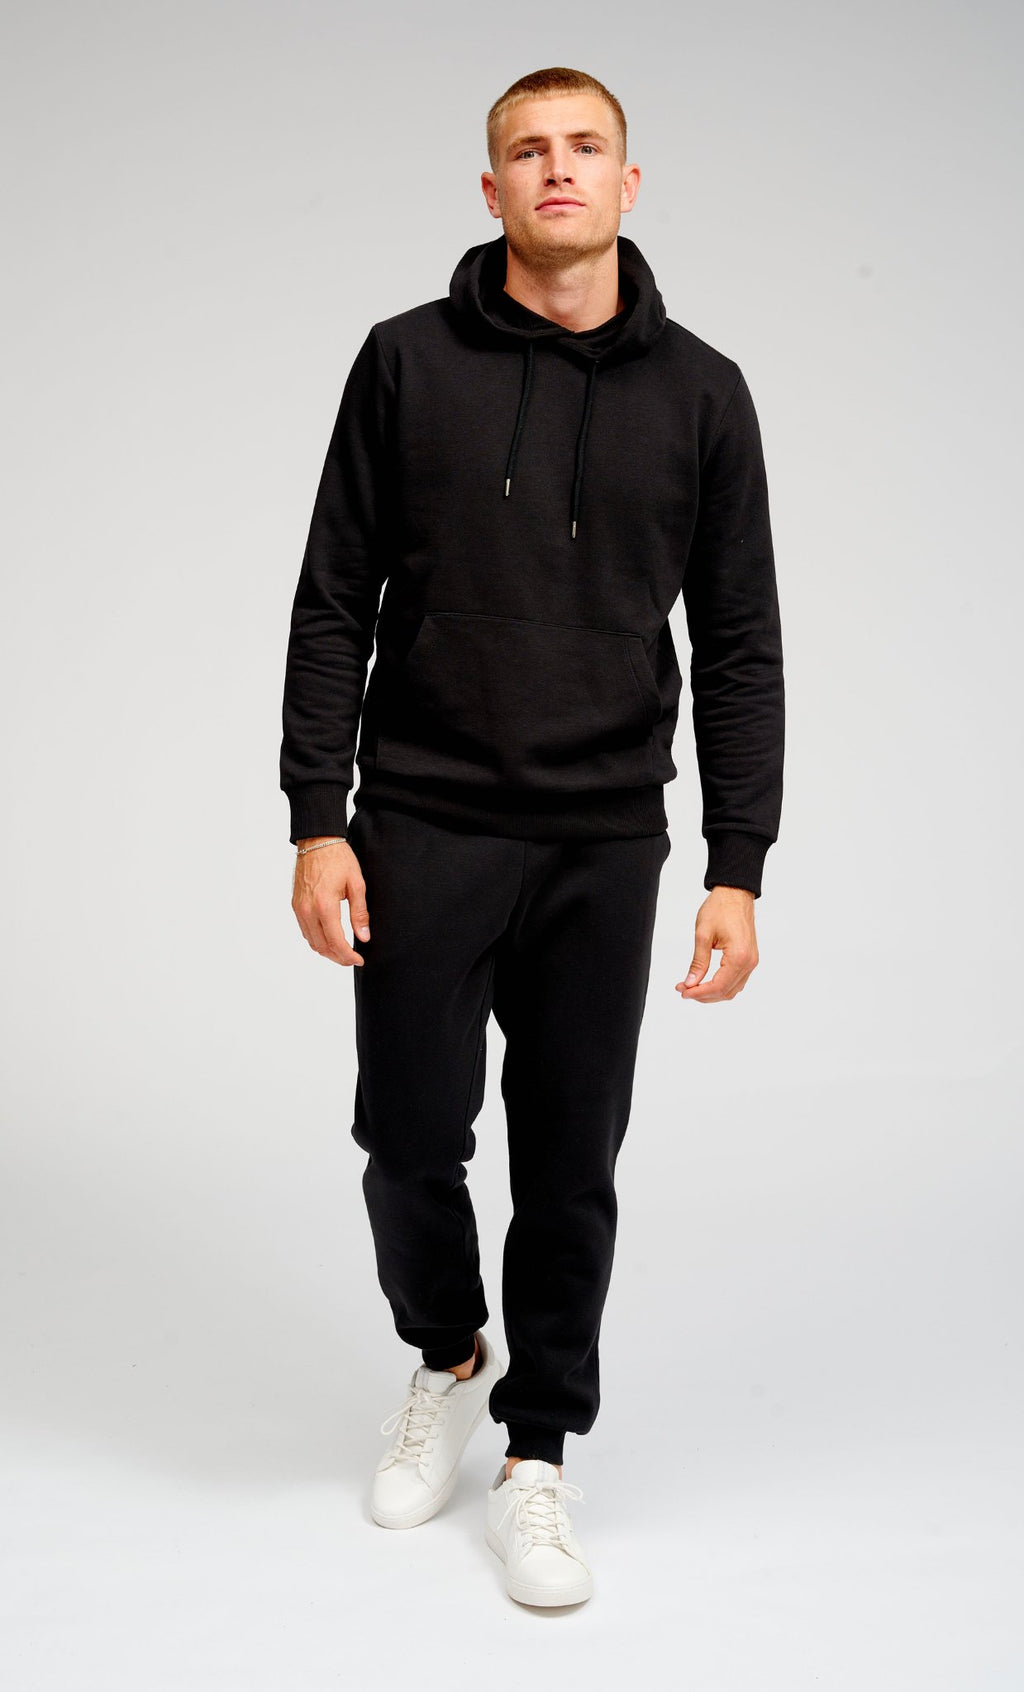 Basic Sweatsuit with Hoodie (Black) - Package Deal